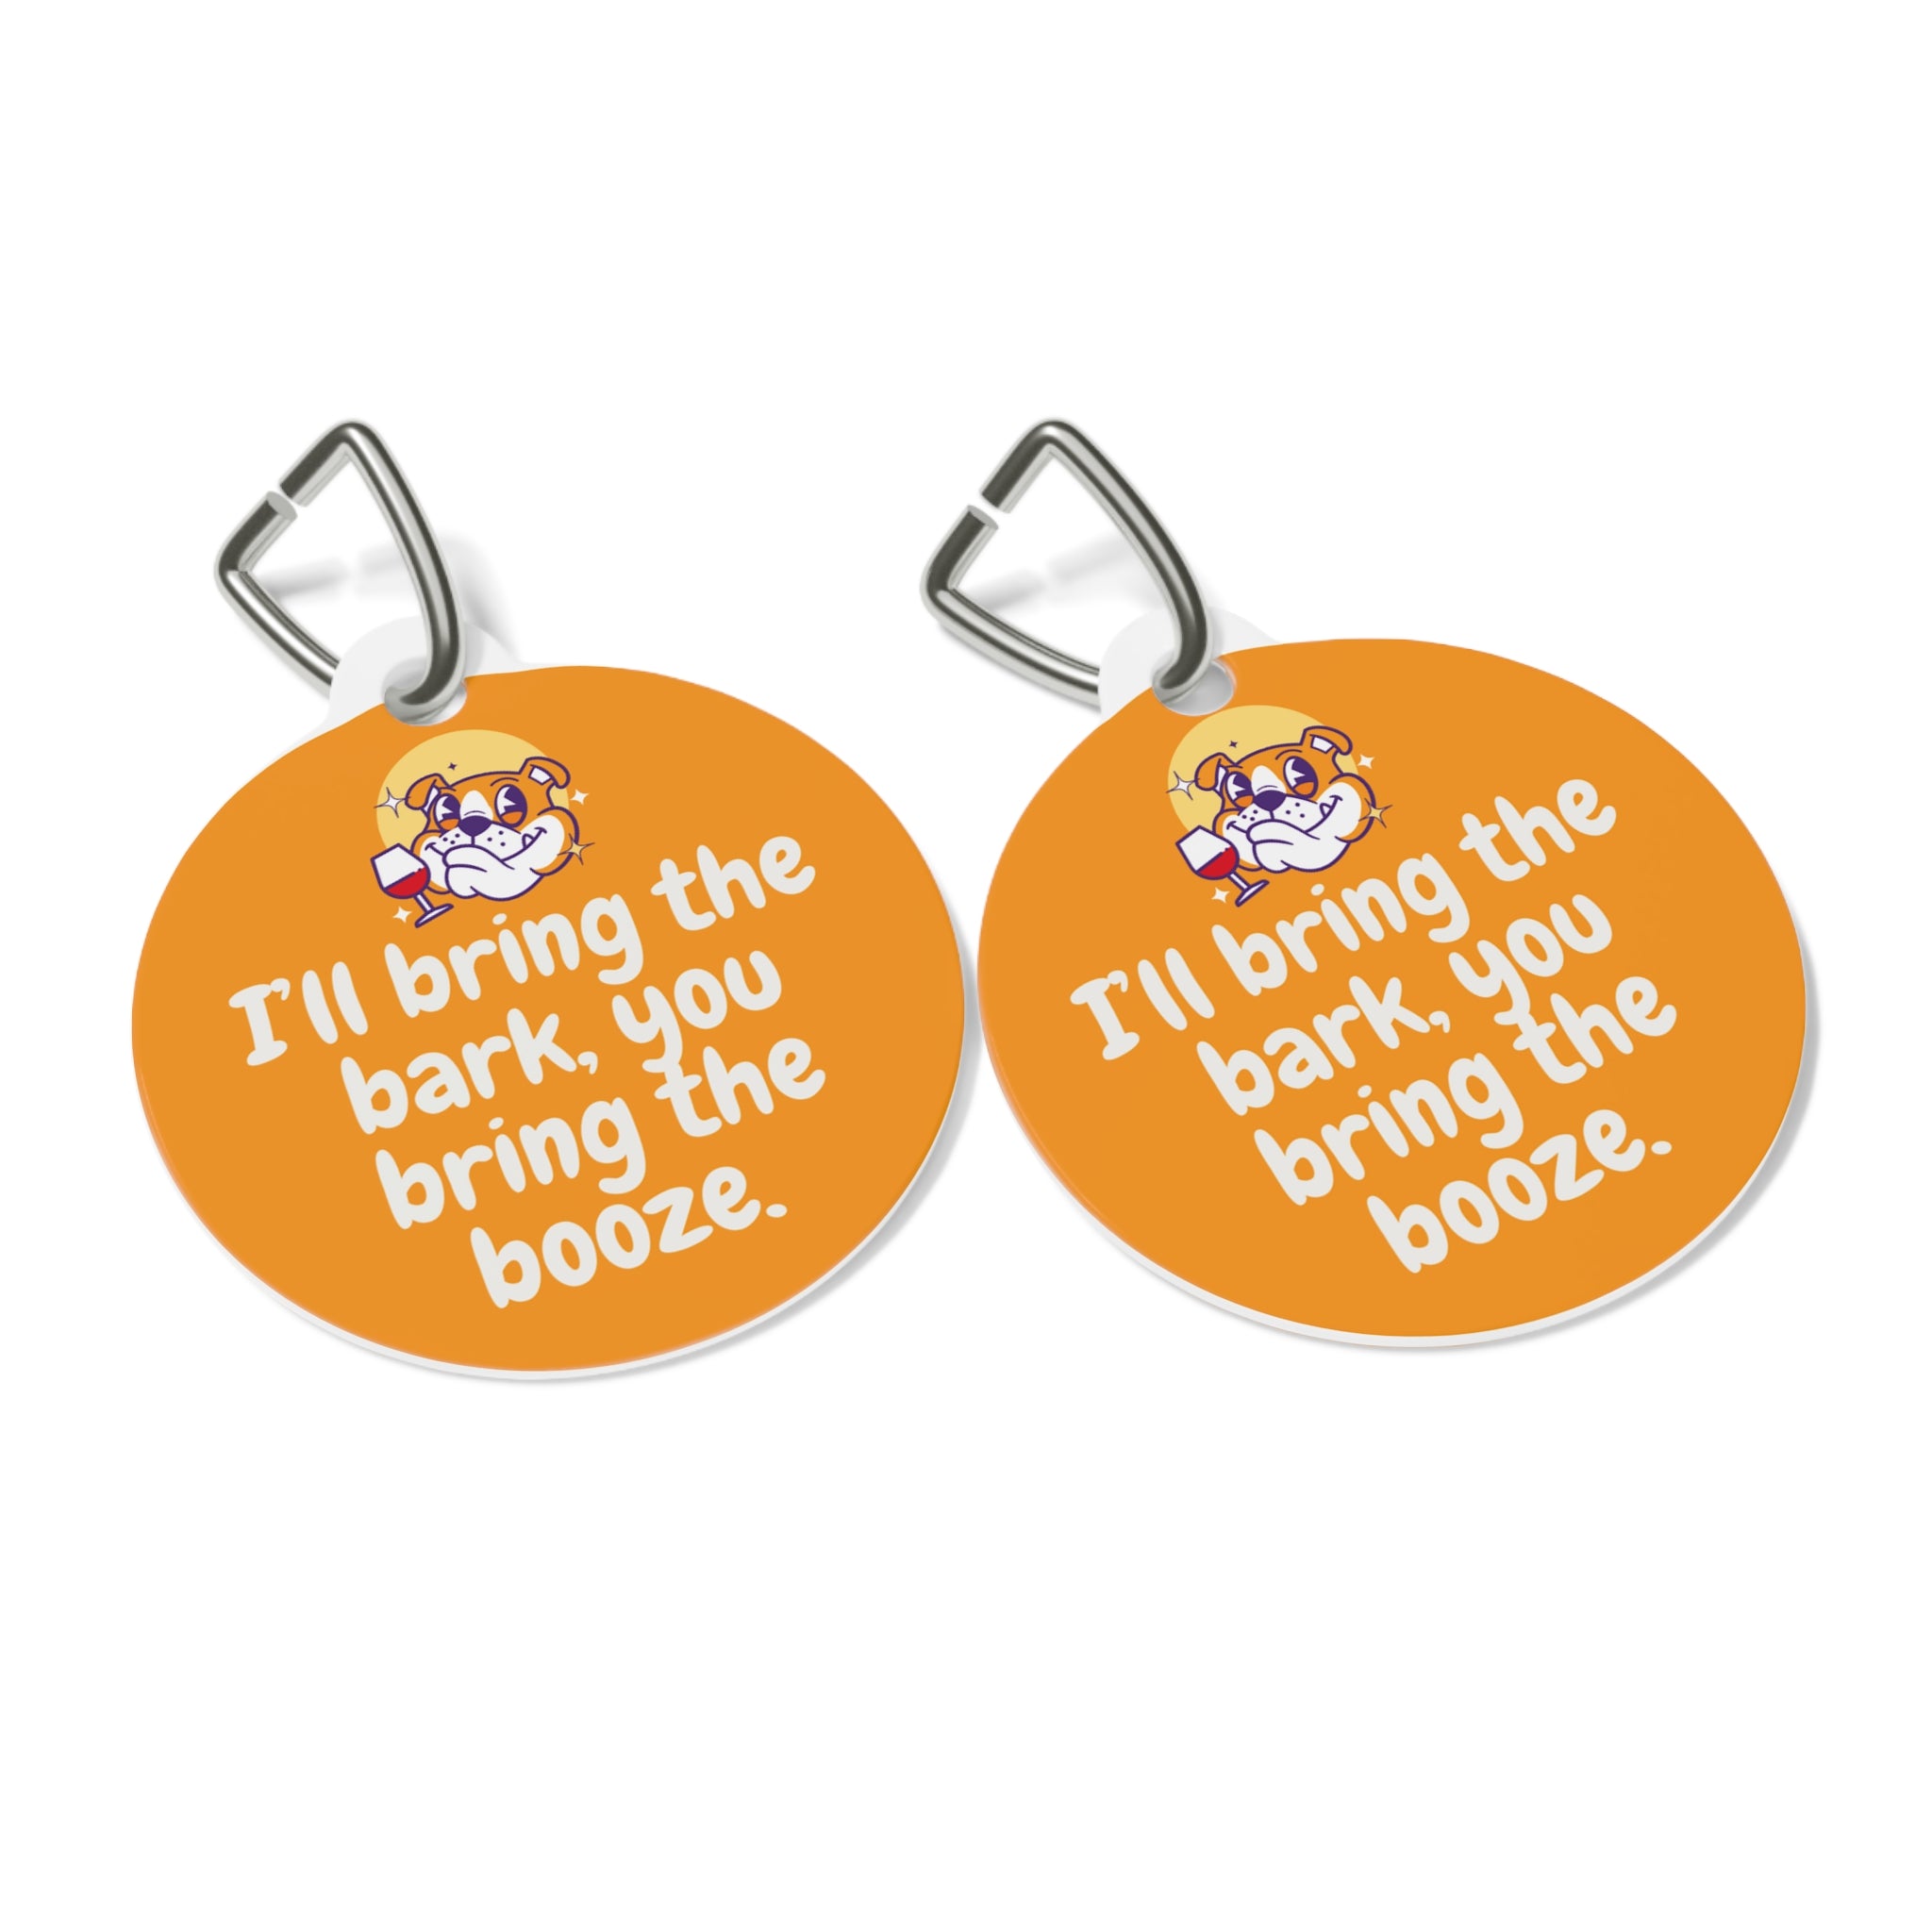 Tipsy Bully Dog Tags: "I'll Bring the Bark, You Bring the Booze" Edition - Orange